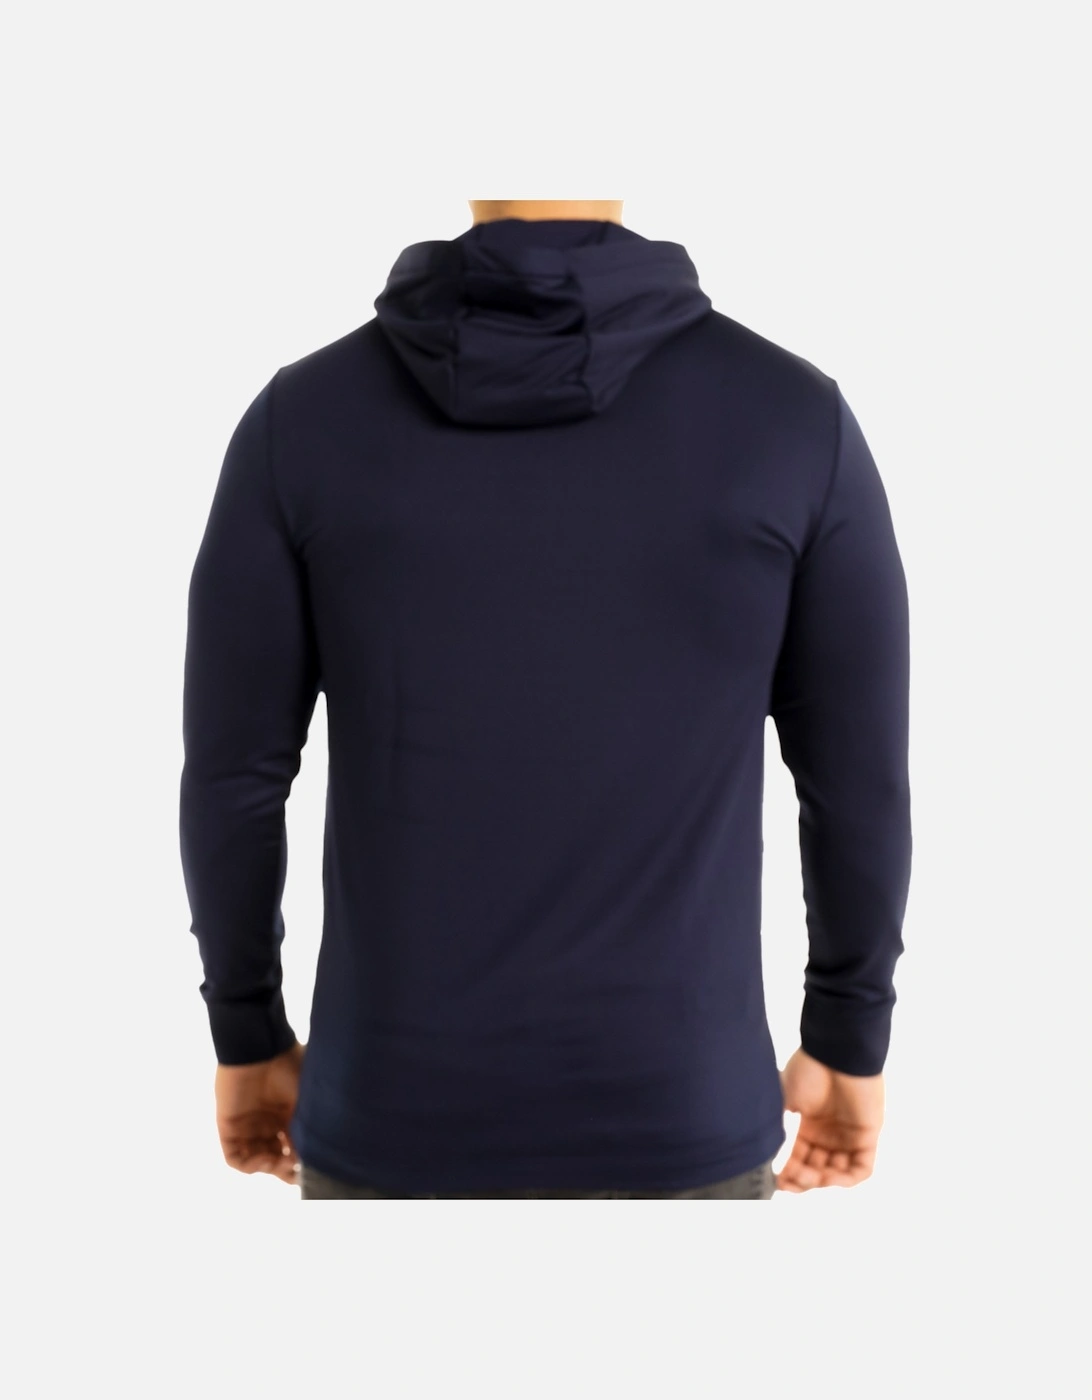 Mens Hooded Overhead Sweatshirt (Navy)